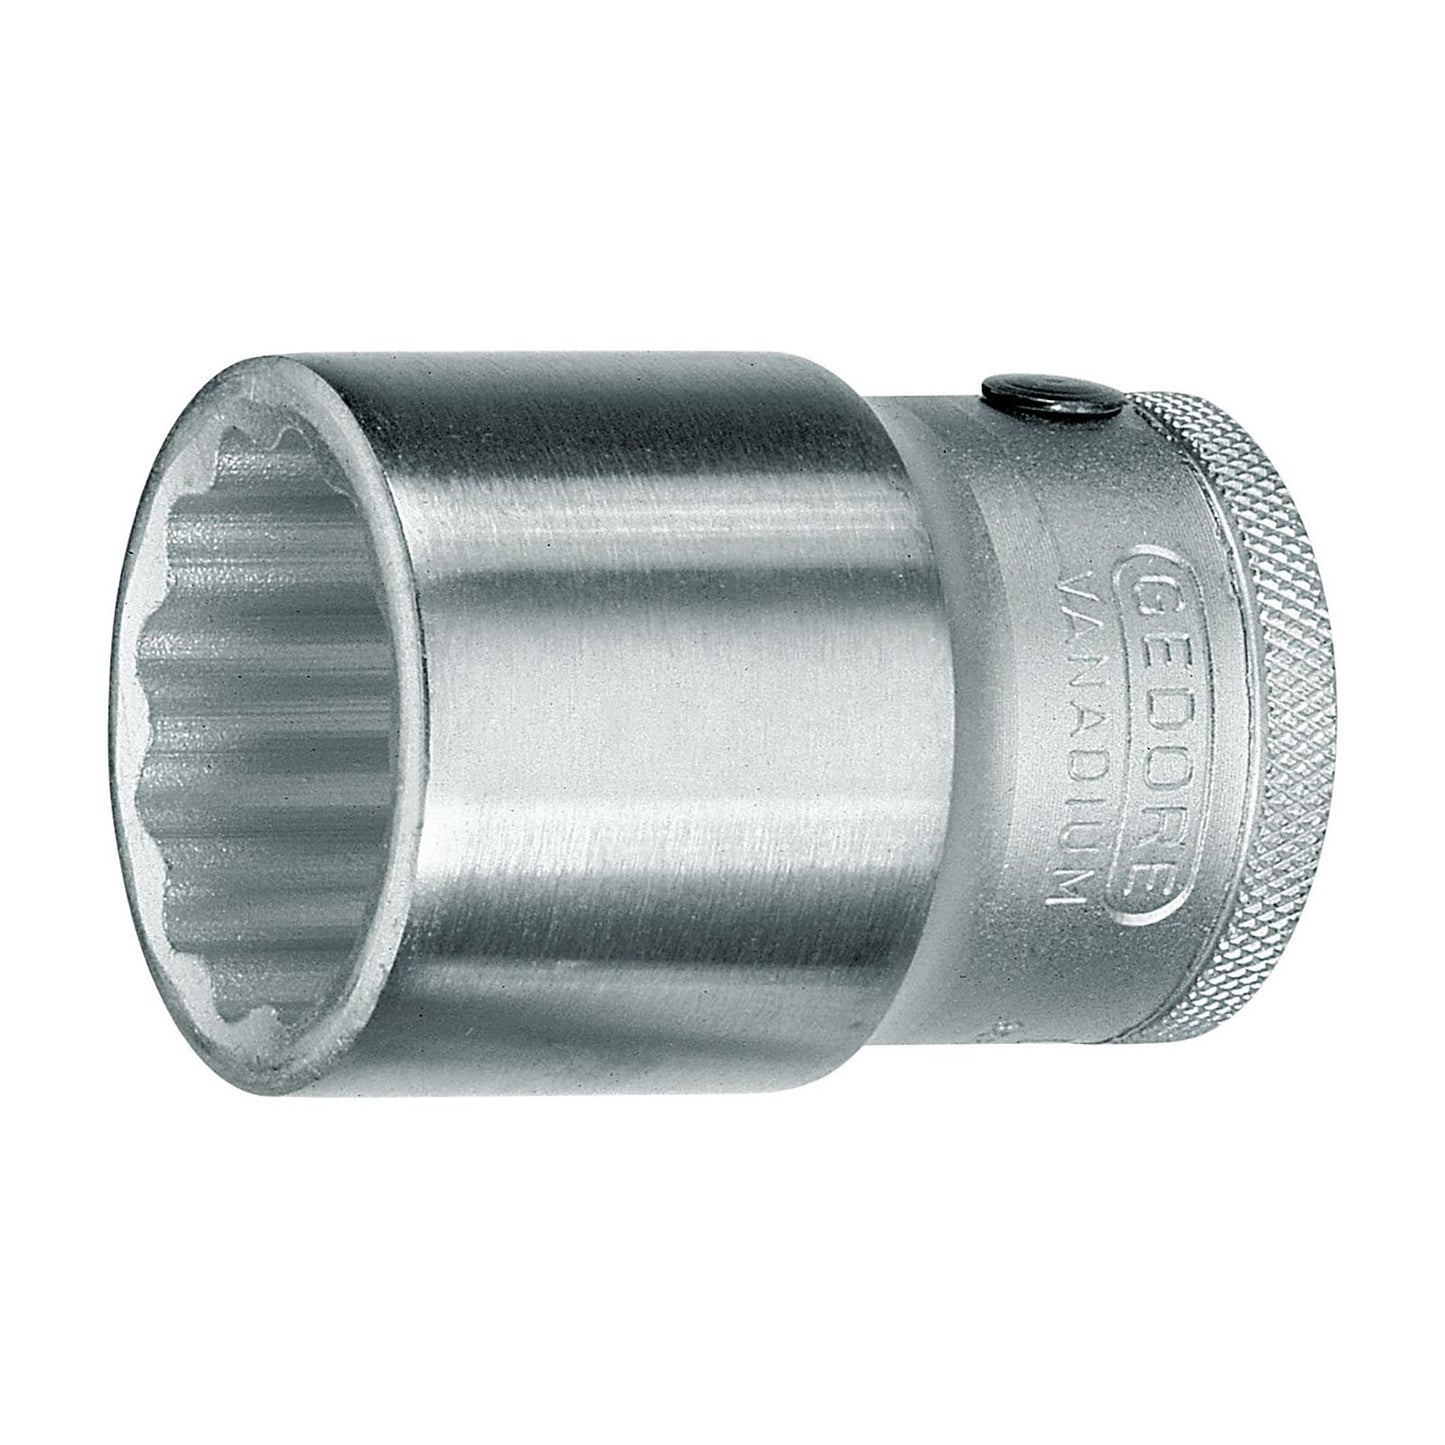 GEDORE D 32 19 - Unit Drive Socket 3/4", 19 mm (6272160)